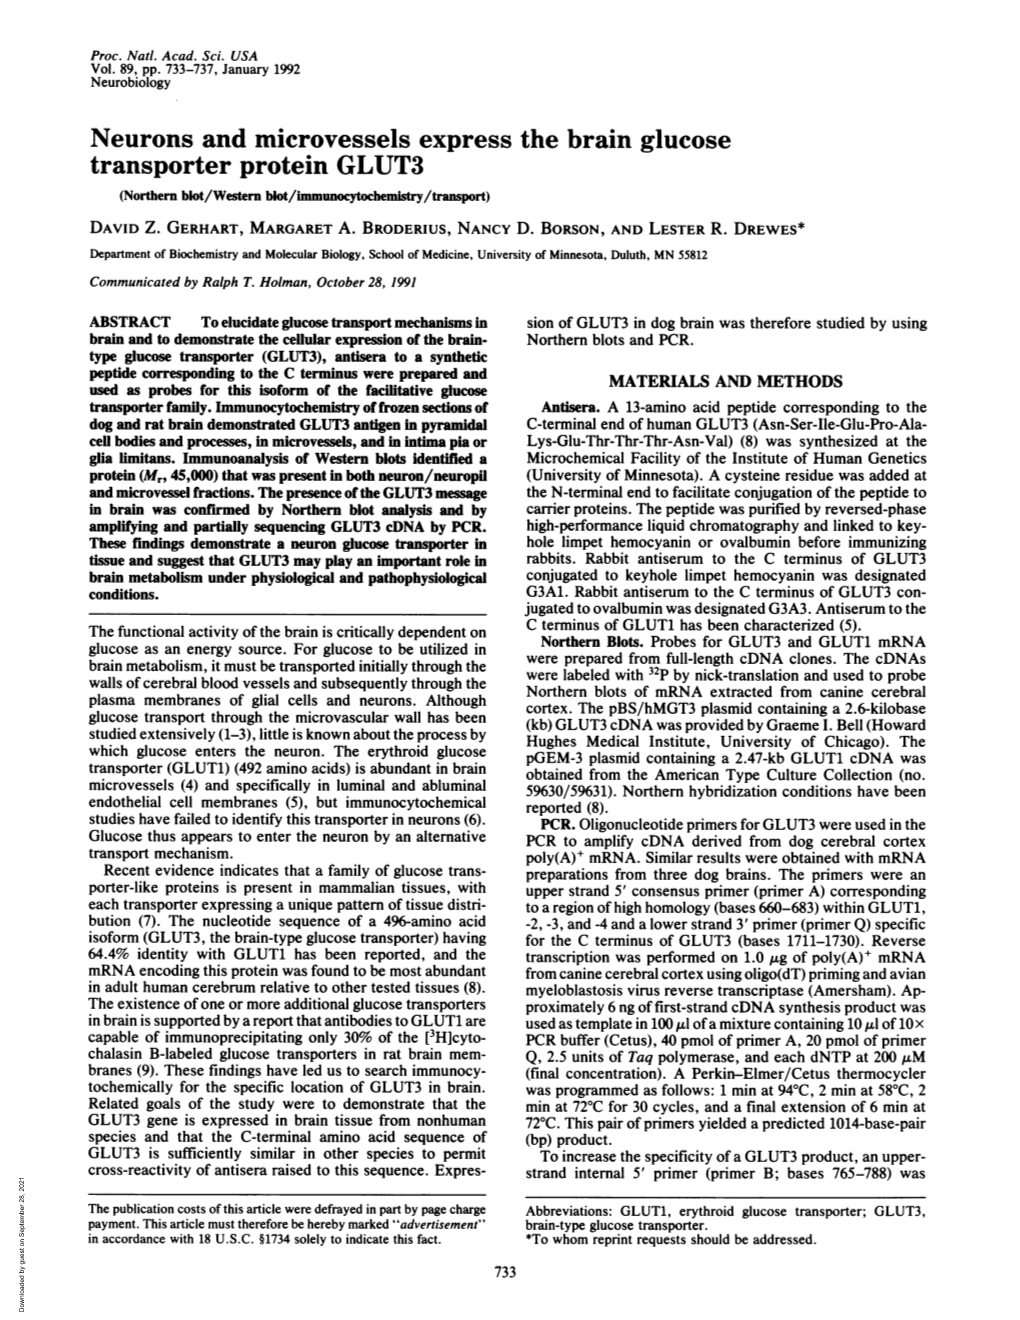 Neurons and Microvessels Express the Brain Glucose Transporter Protein GLUT3 (Northern Blot/Western Blot/Immunocytochemistry/Transport) DAVID Z